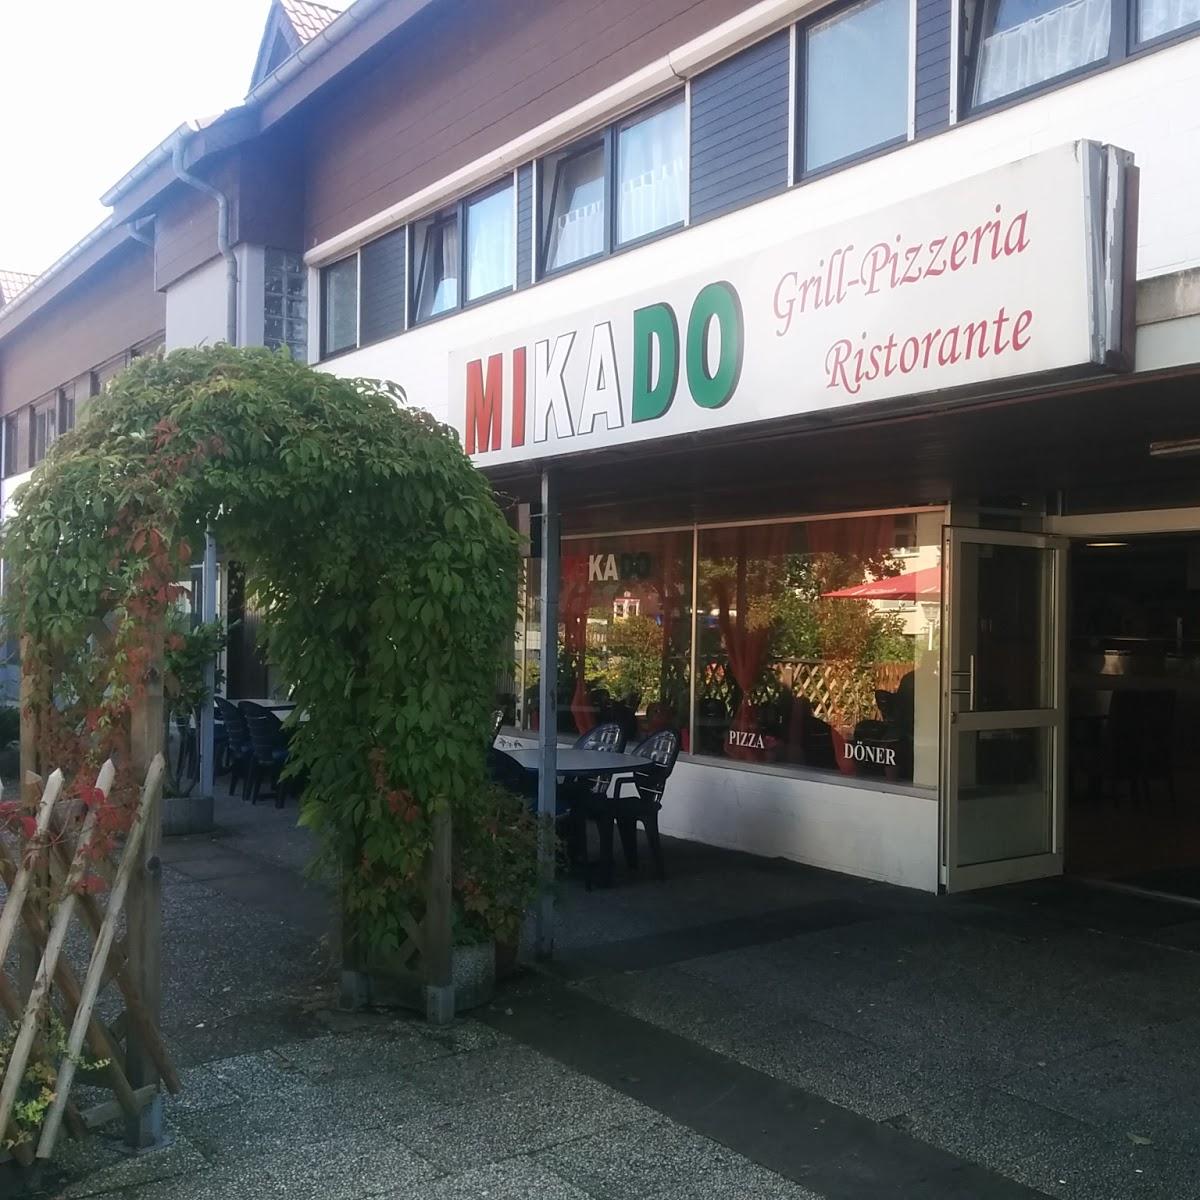 Restaurant "Mikado Grill & Pizzeria" in  Oerlinghausen